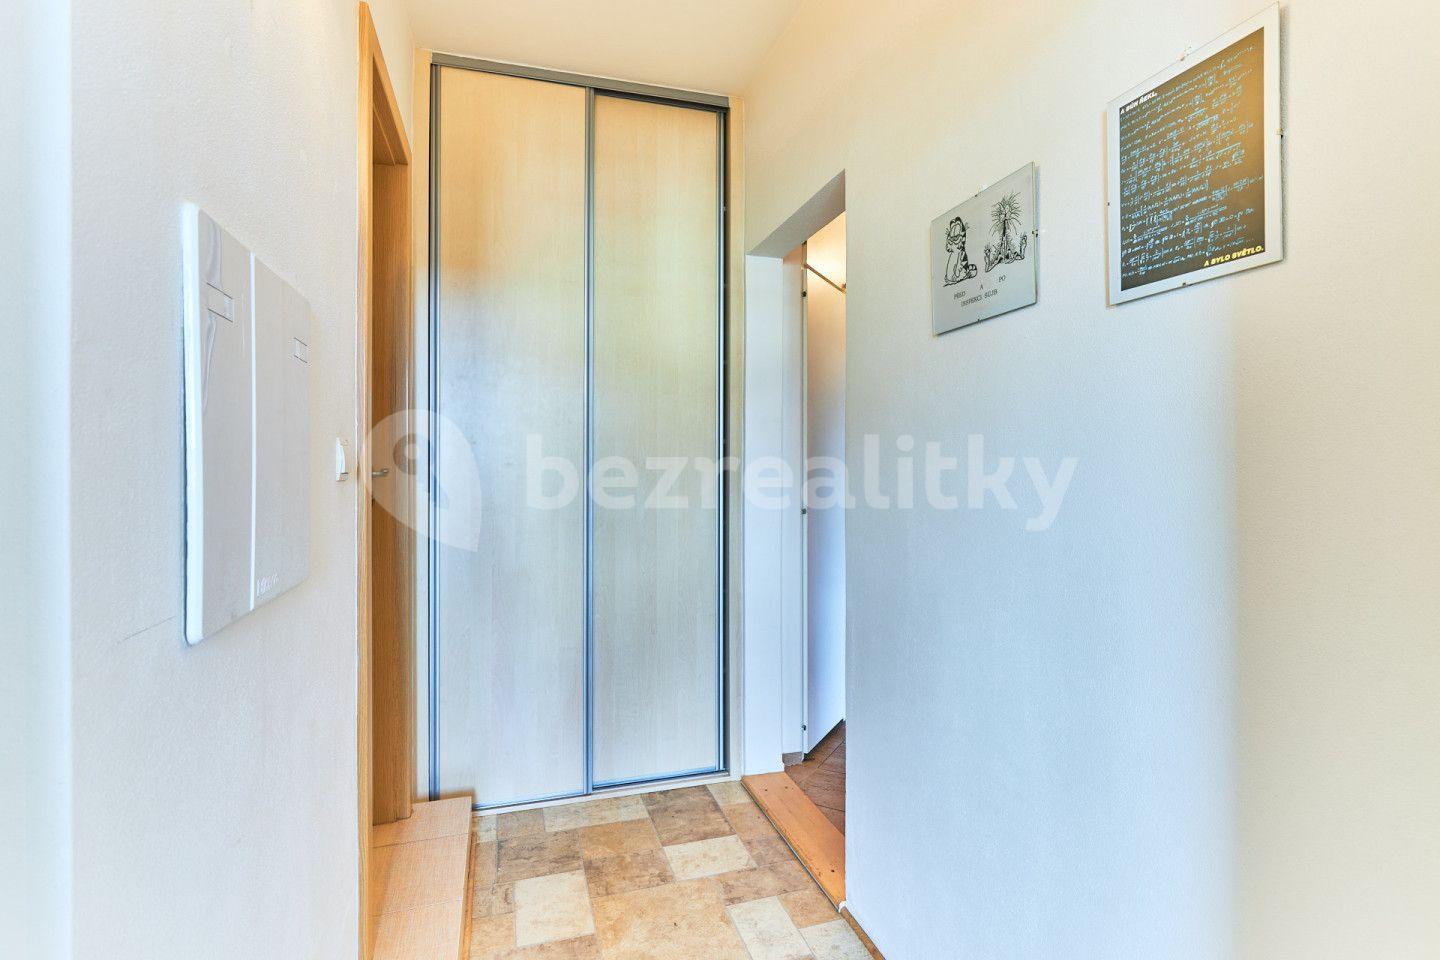 Predaj bytu 2-izbový 58 m², B. Němcové, Protivín, Jihočeský kraj